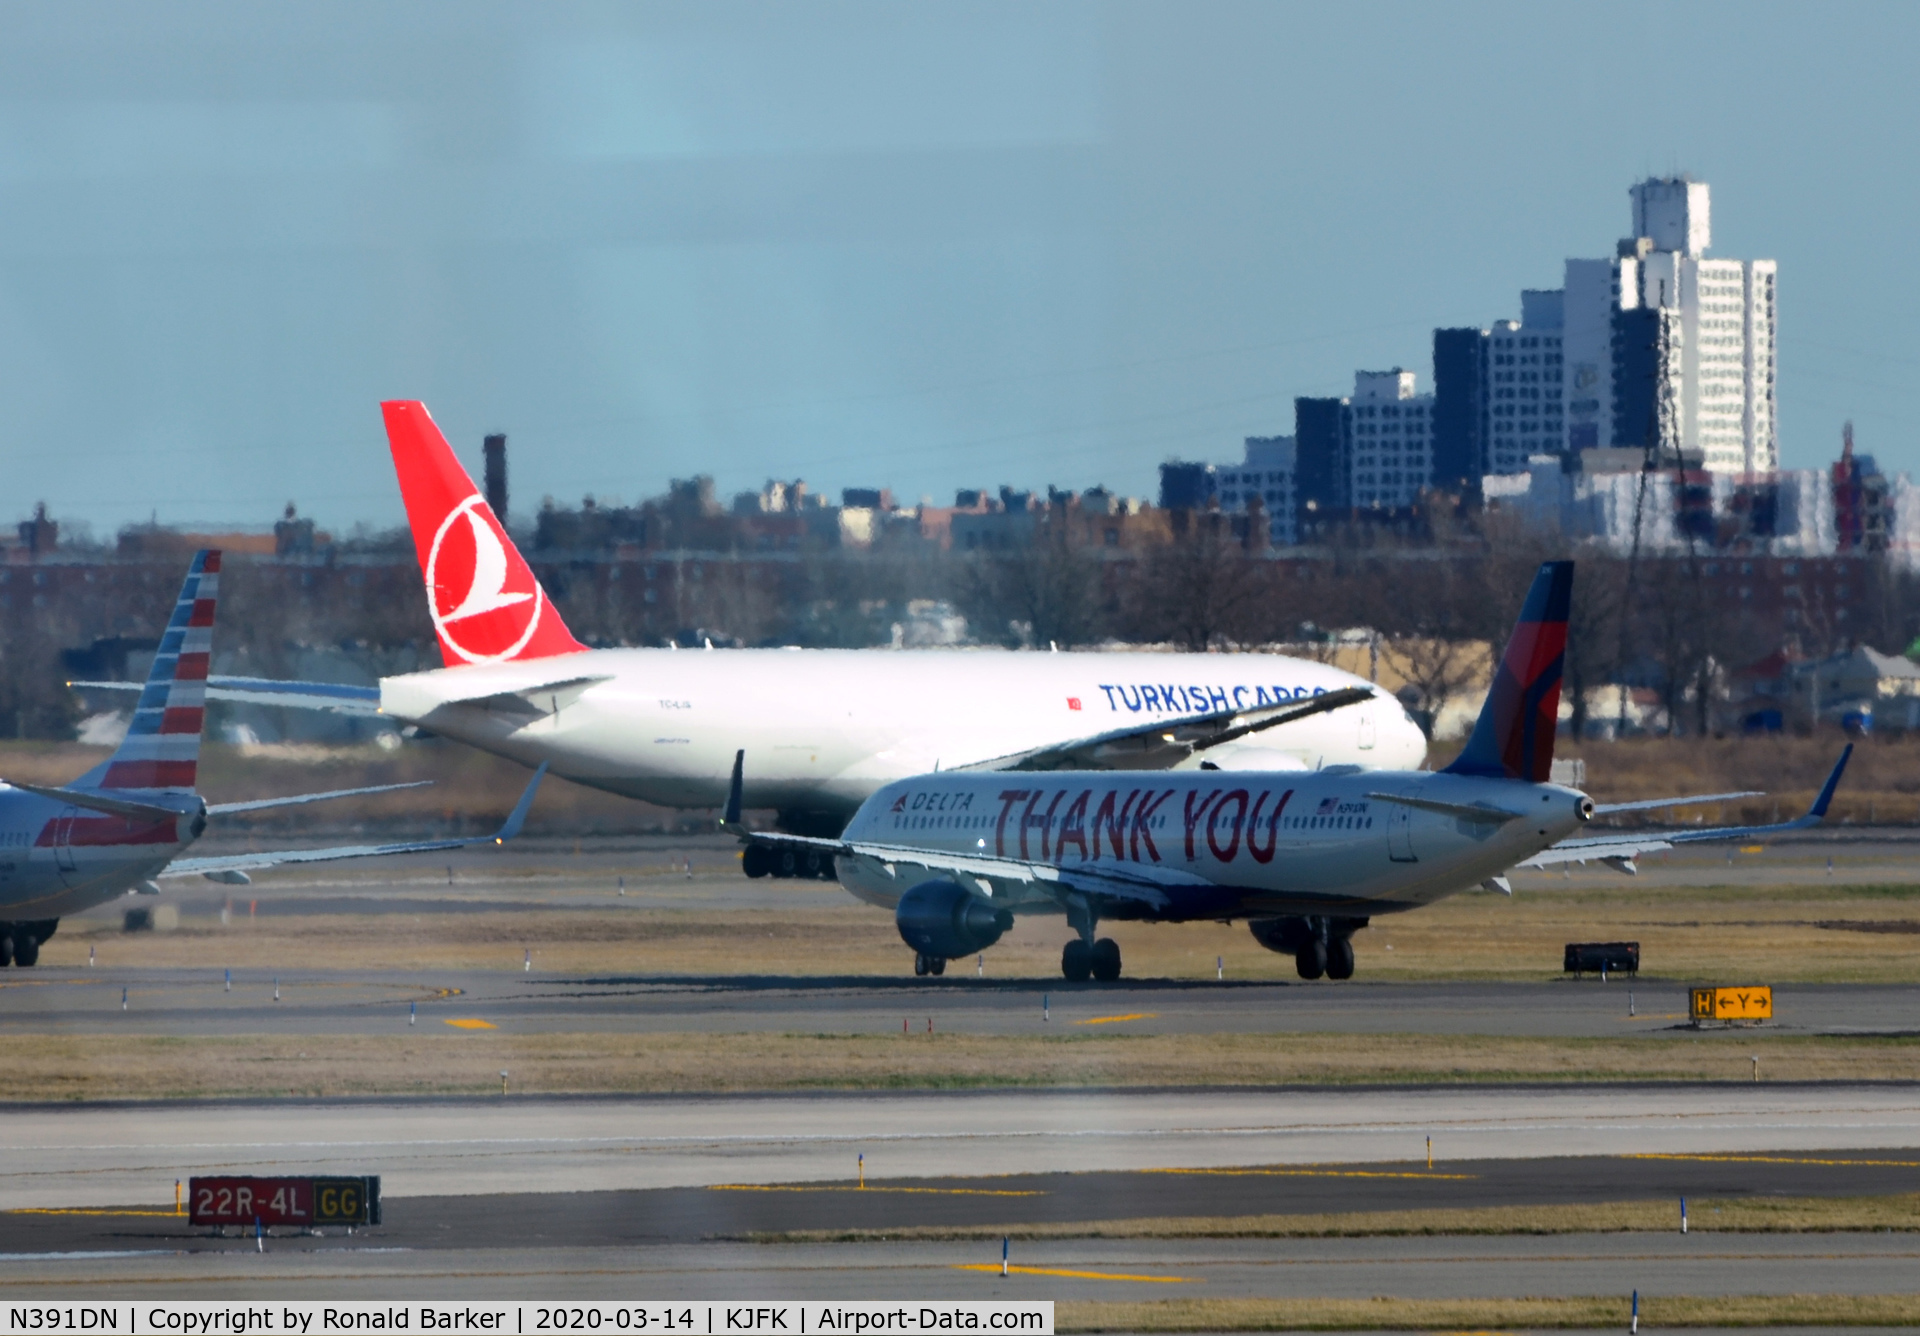 N391DN, 2019 Airbus A321-211 C/N 9027, Delta ship & Turkish cargo taxi JFK